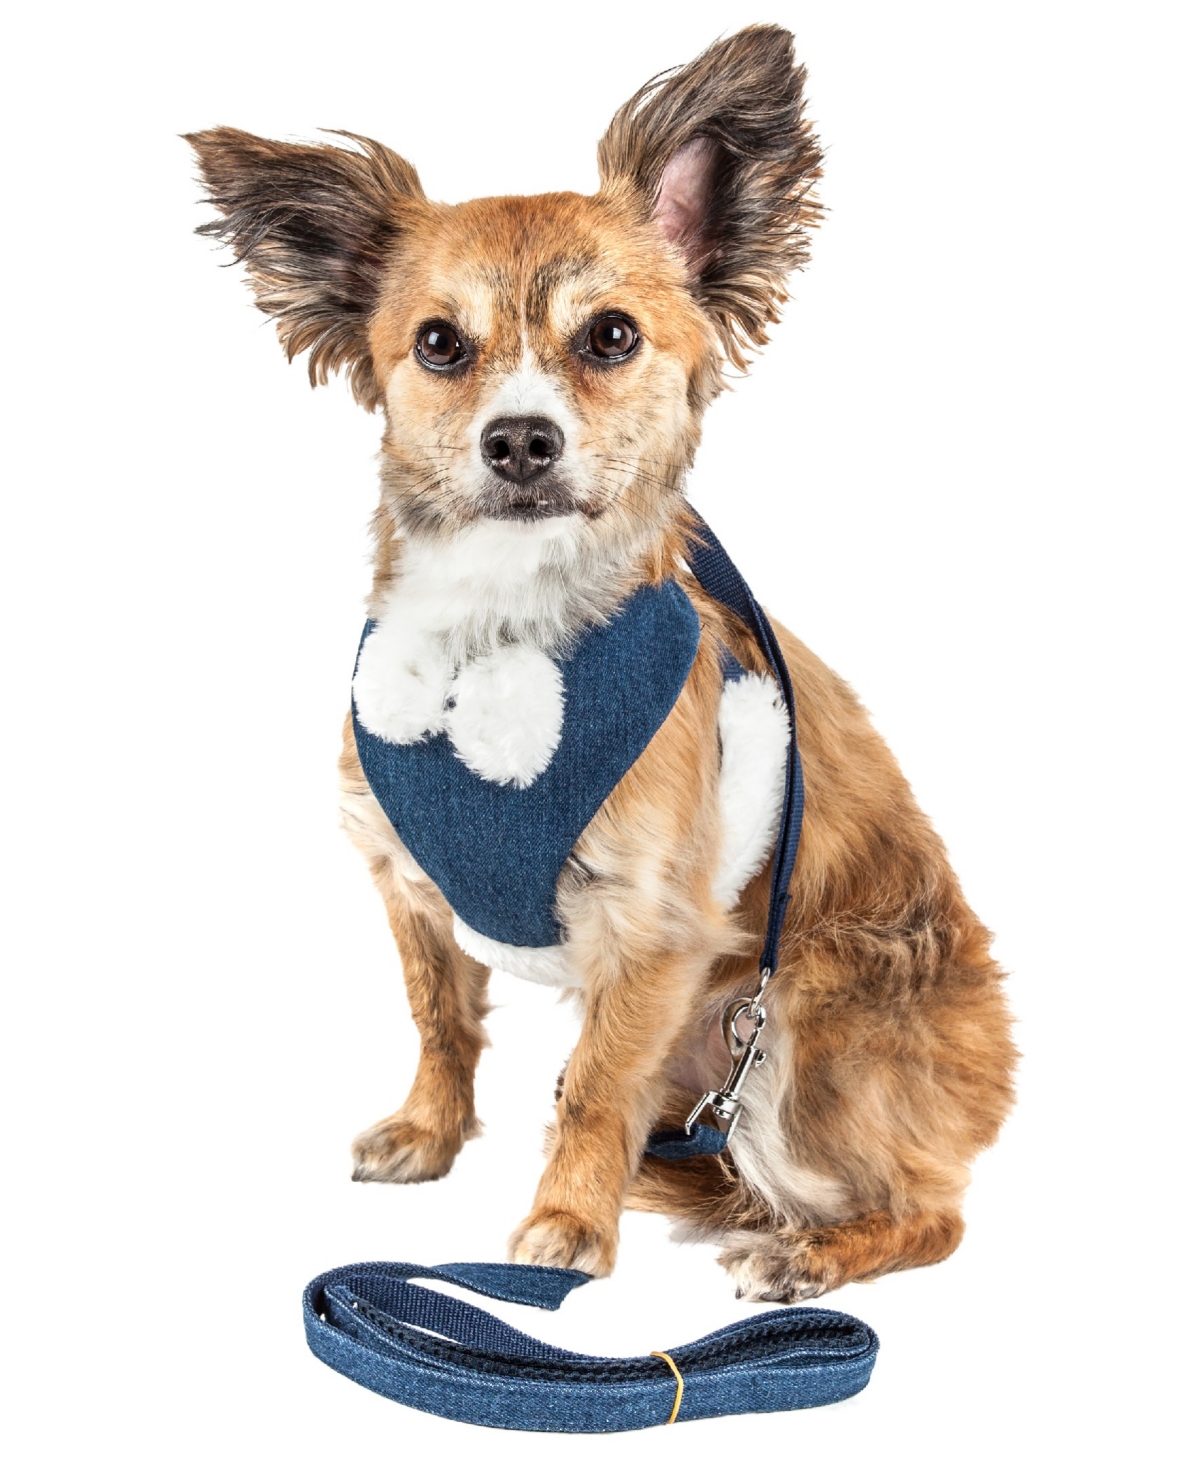 Luxe 'Pom Draper' 2-in-1 Adjustable Dog Harness Leash with Pom-Pom Bowtie - Blue